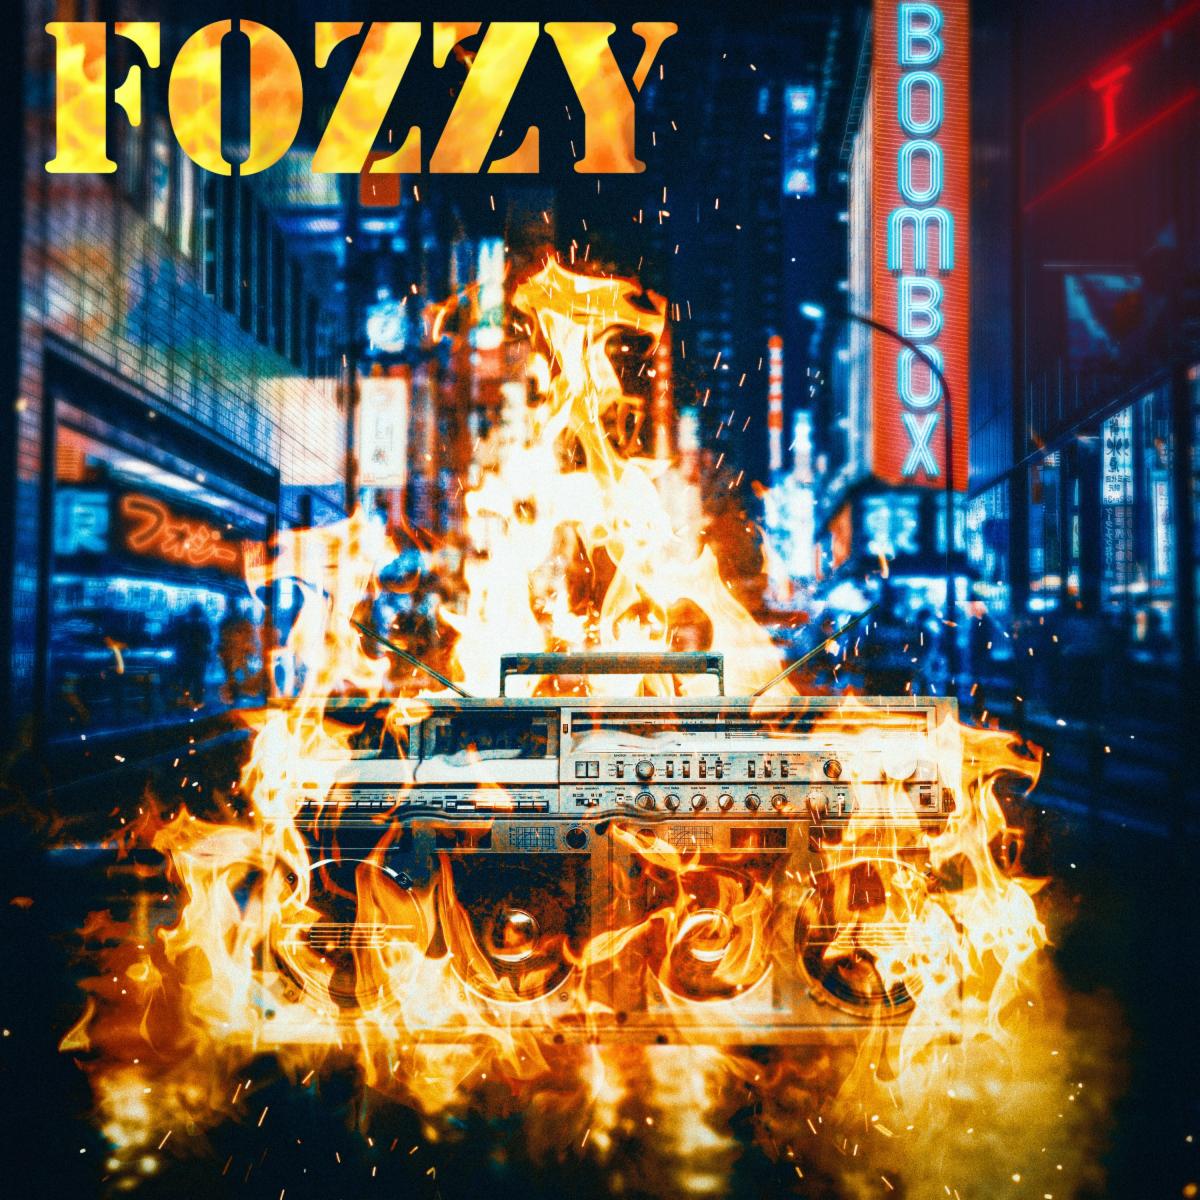 FOZZY - New Studio Album 'Boombox' Out Now!